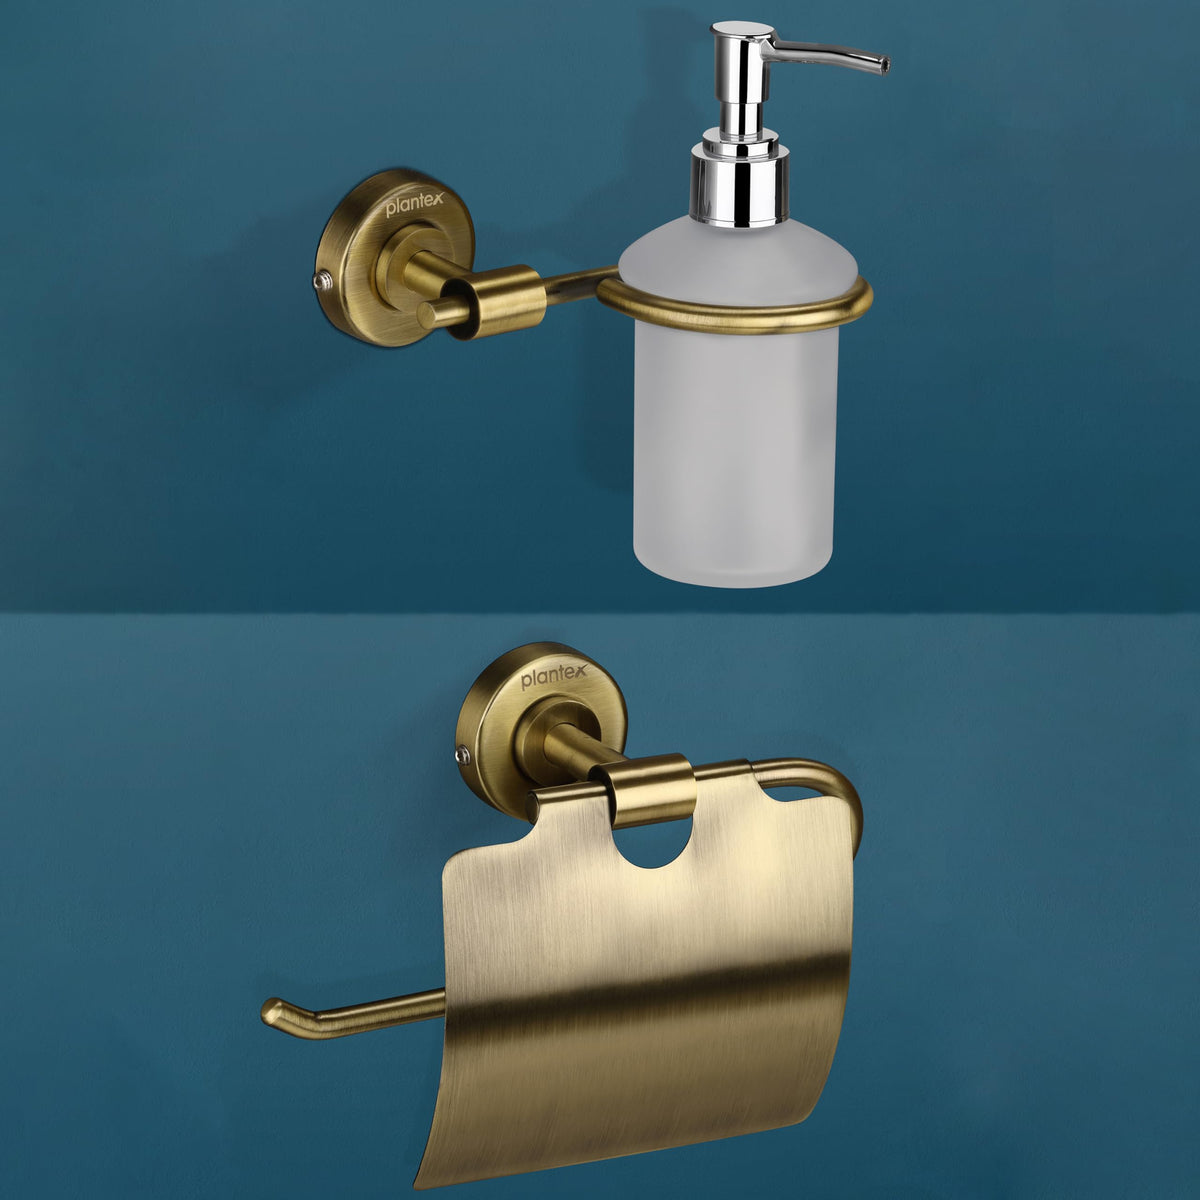 Plantex 304 Grade Stainless Steel Washroom Set of 2 - Toilet Paper Holder/Stand/Liquid Soap Dispenser - Daizy (Brass Antique)